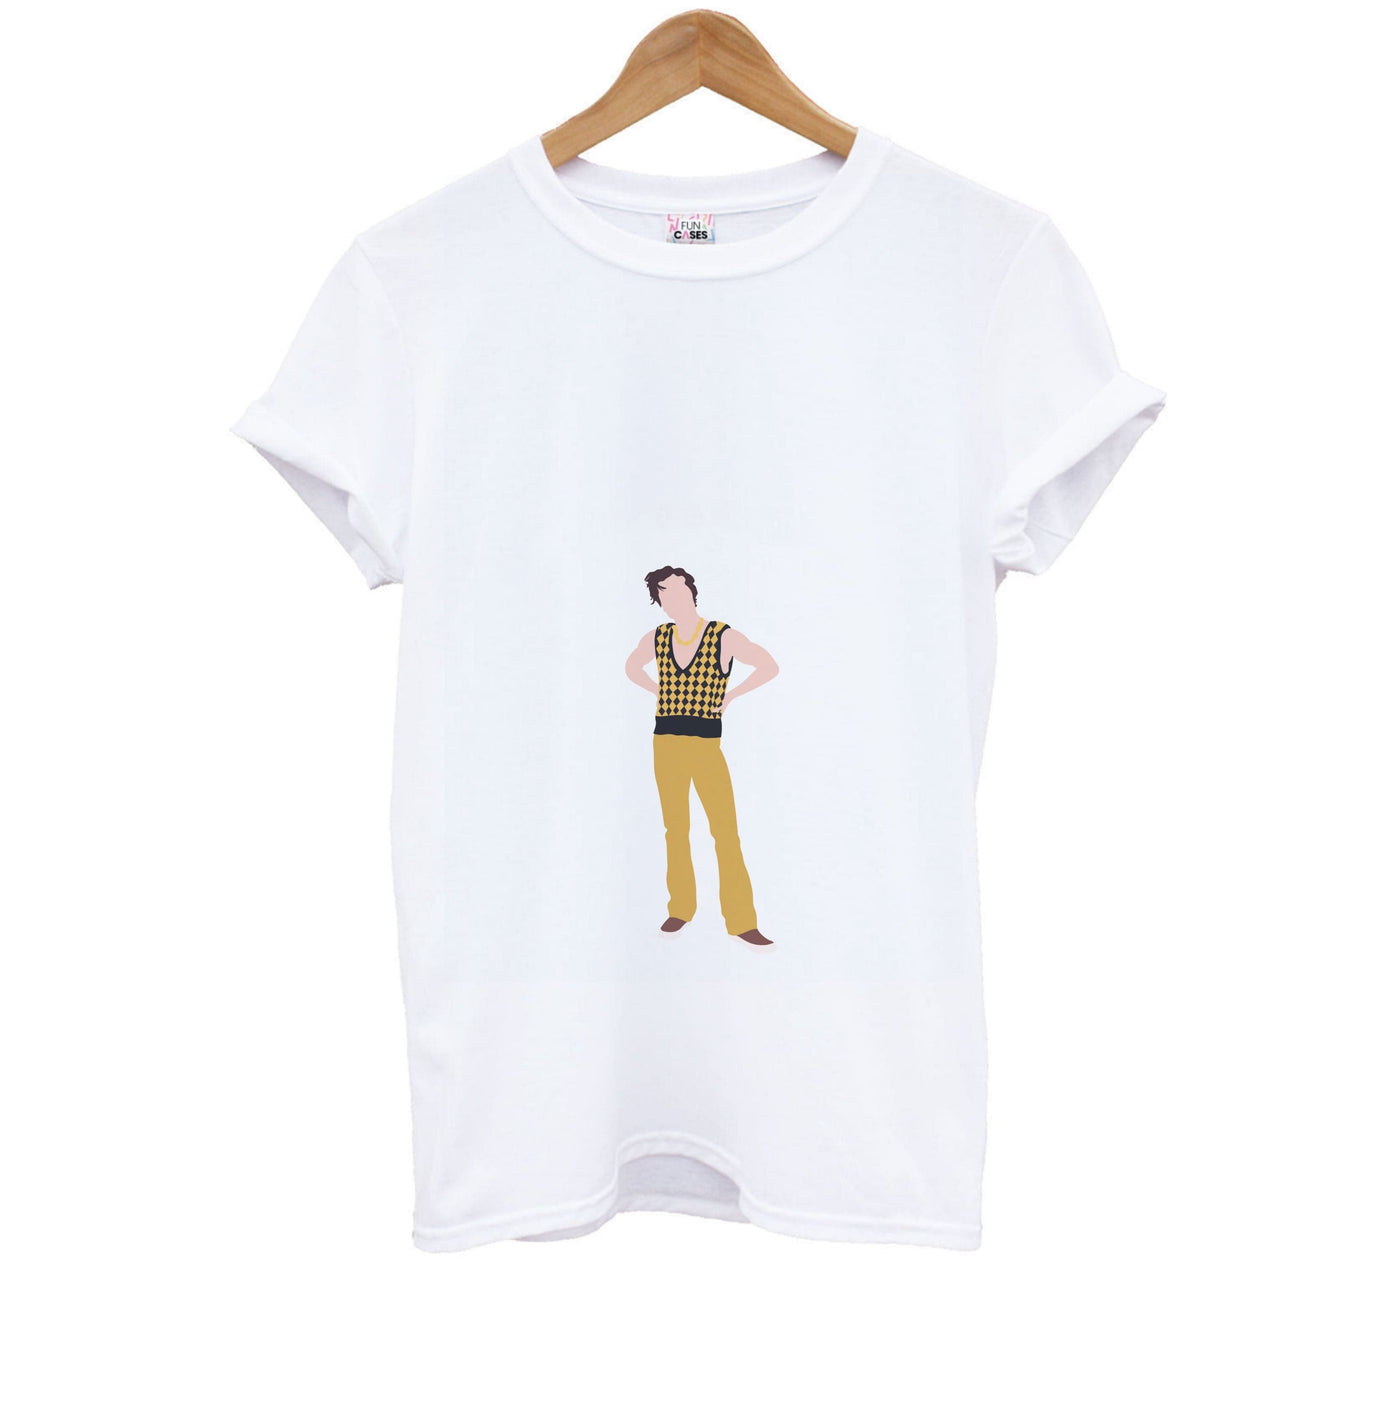 Yellow Vest - Harry Kids T-Shirt